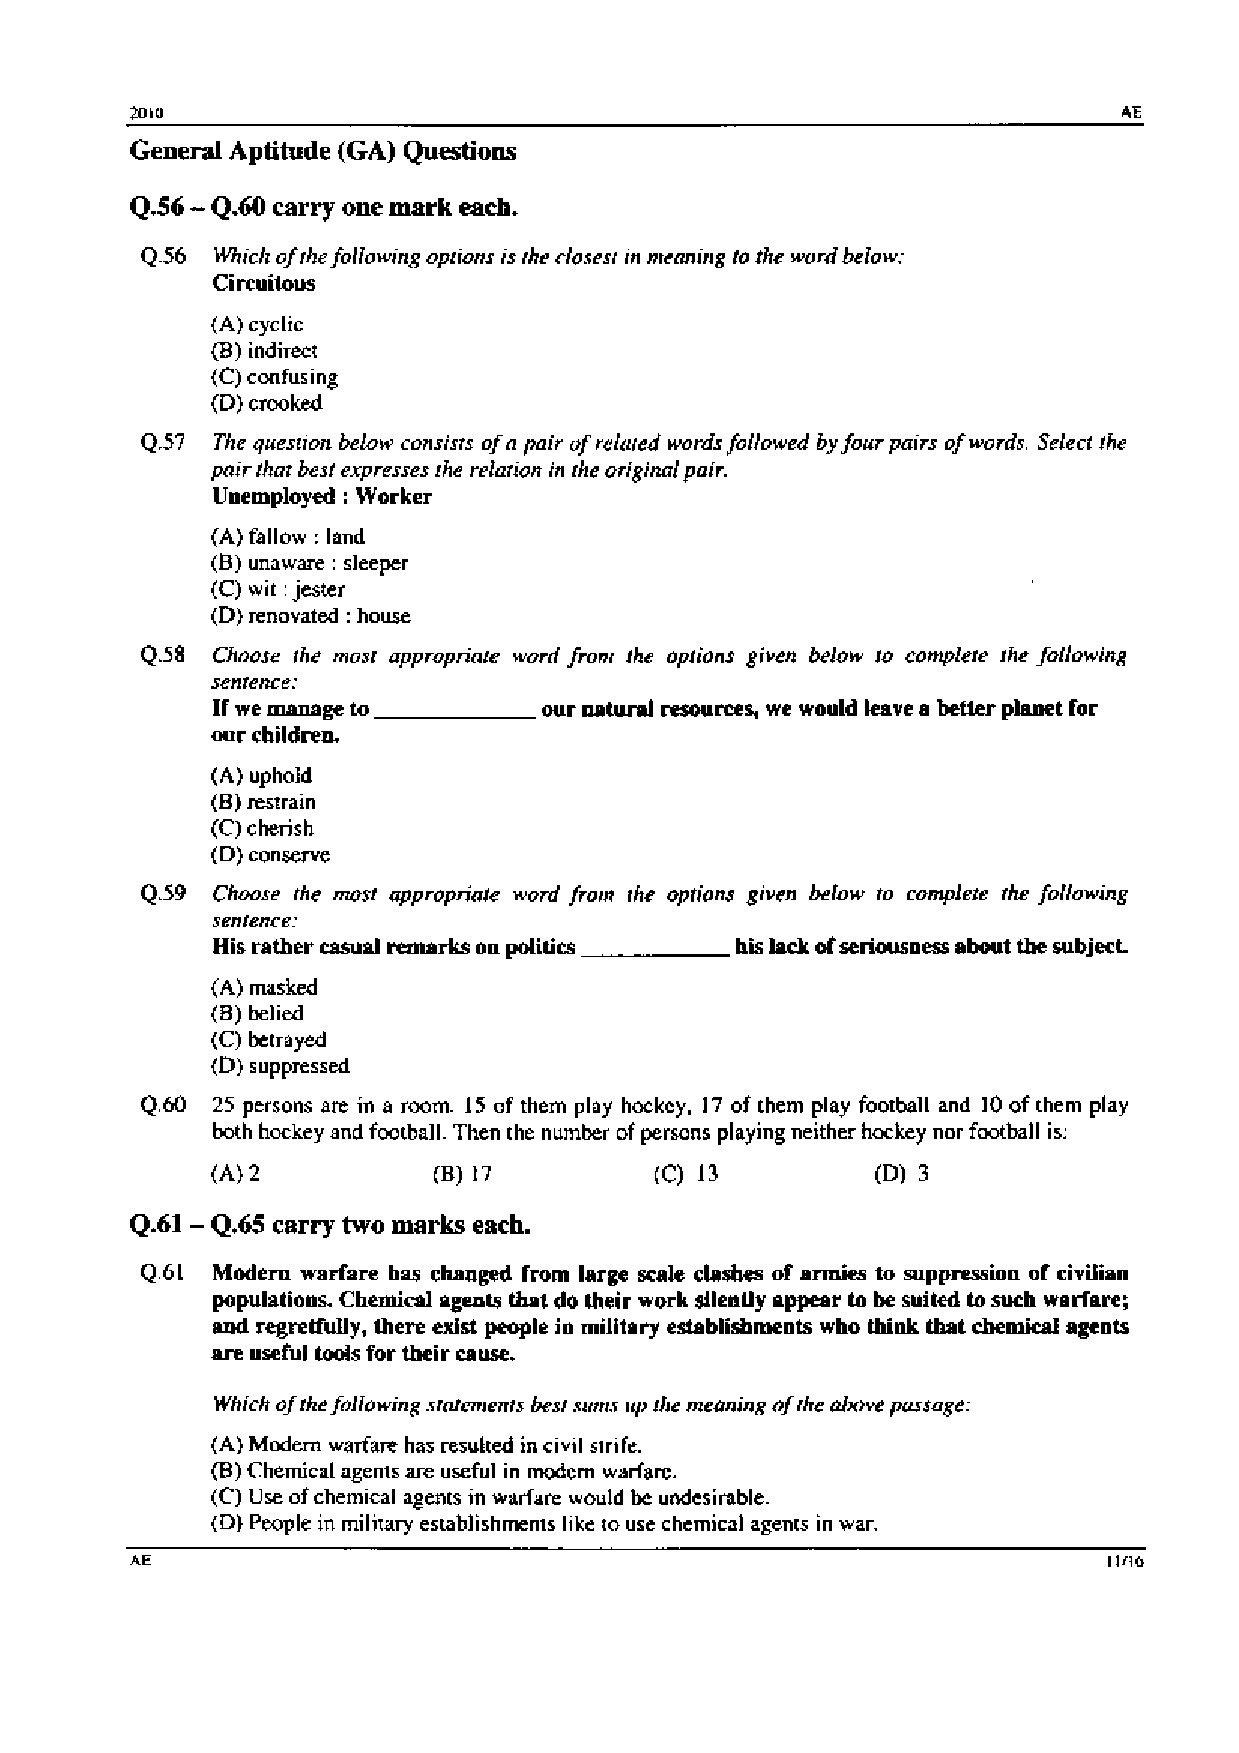 GATE Exam 2010 Aerospace Engineering Question Paper 11